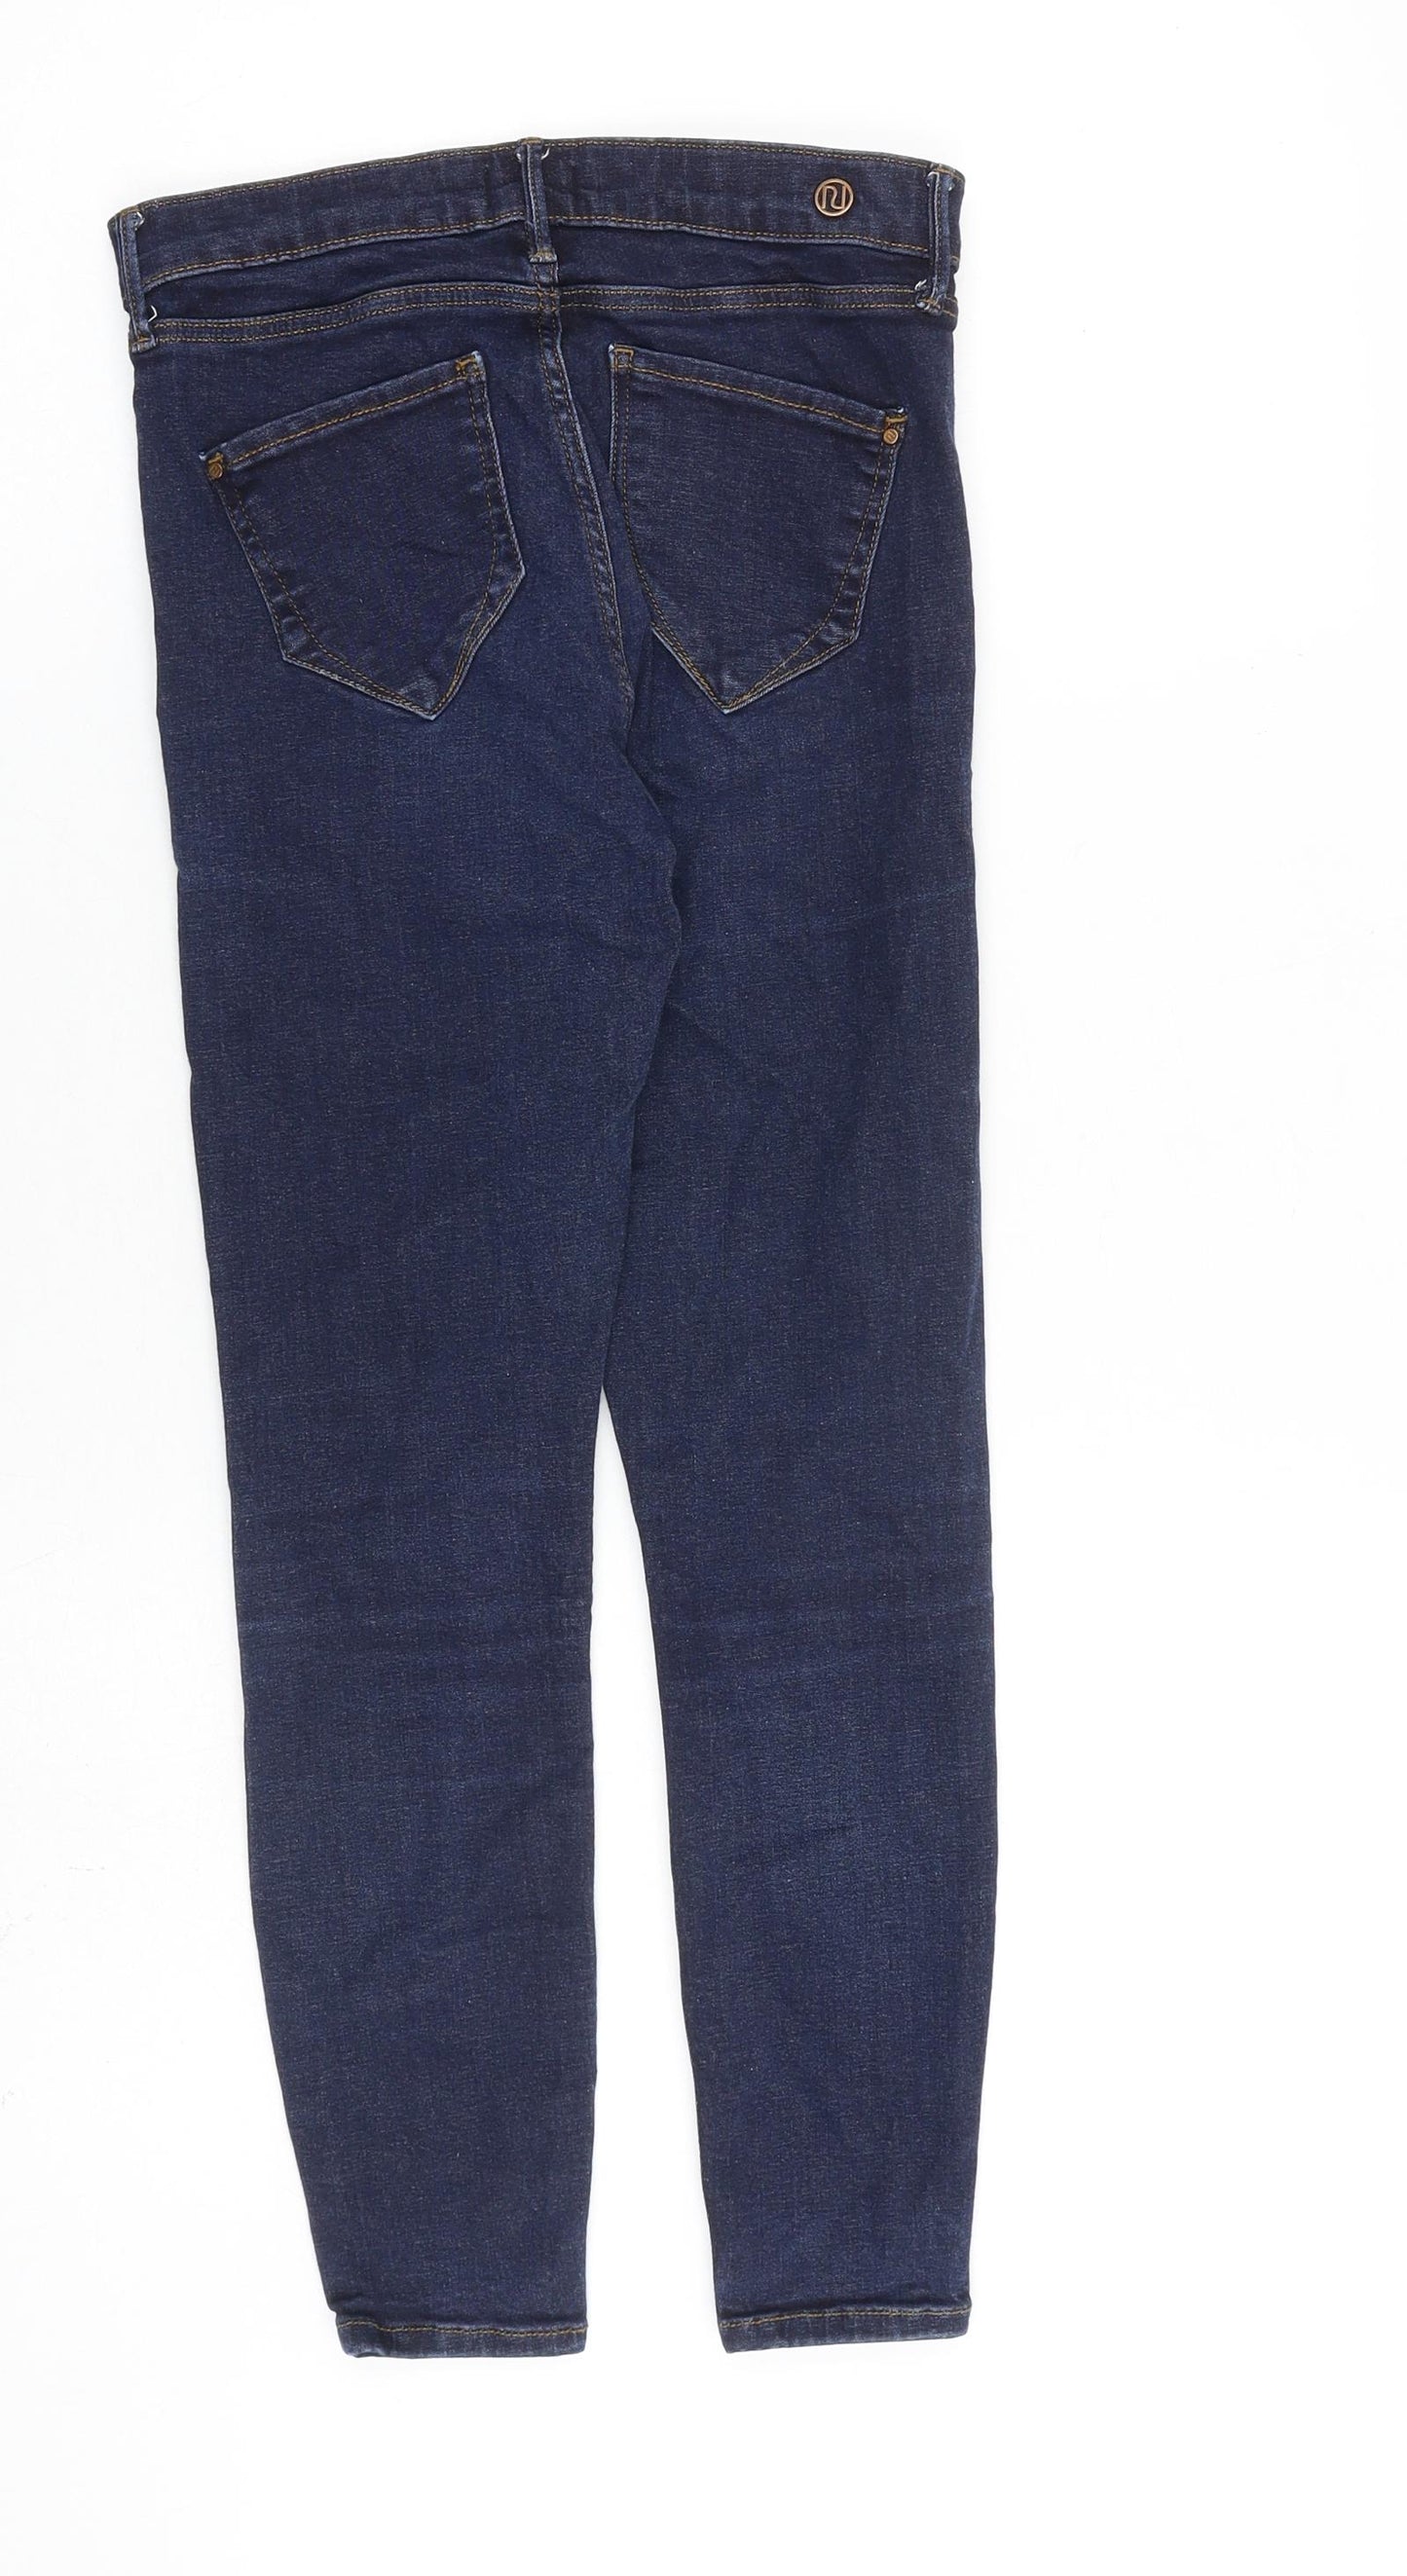 River Island Womens Blue Cotton Skinny Jeans Size 8 L24 in Slim Zip